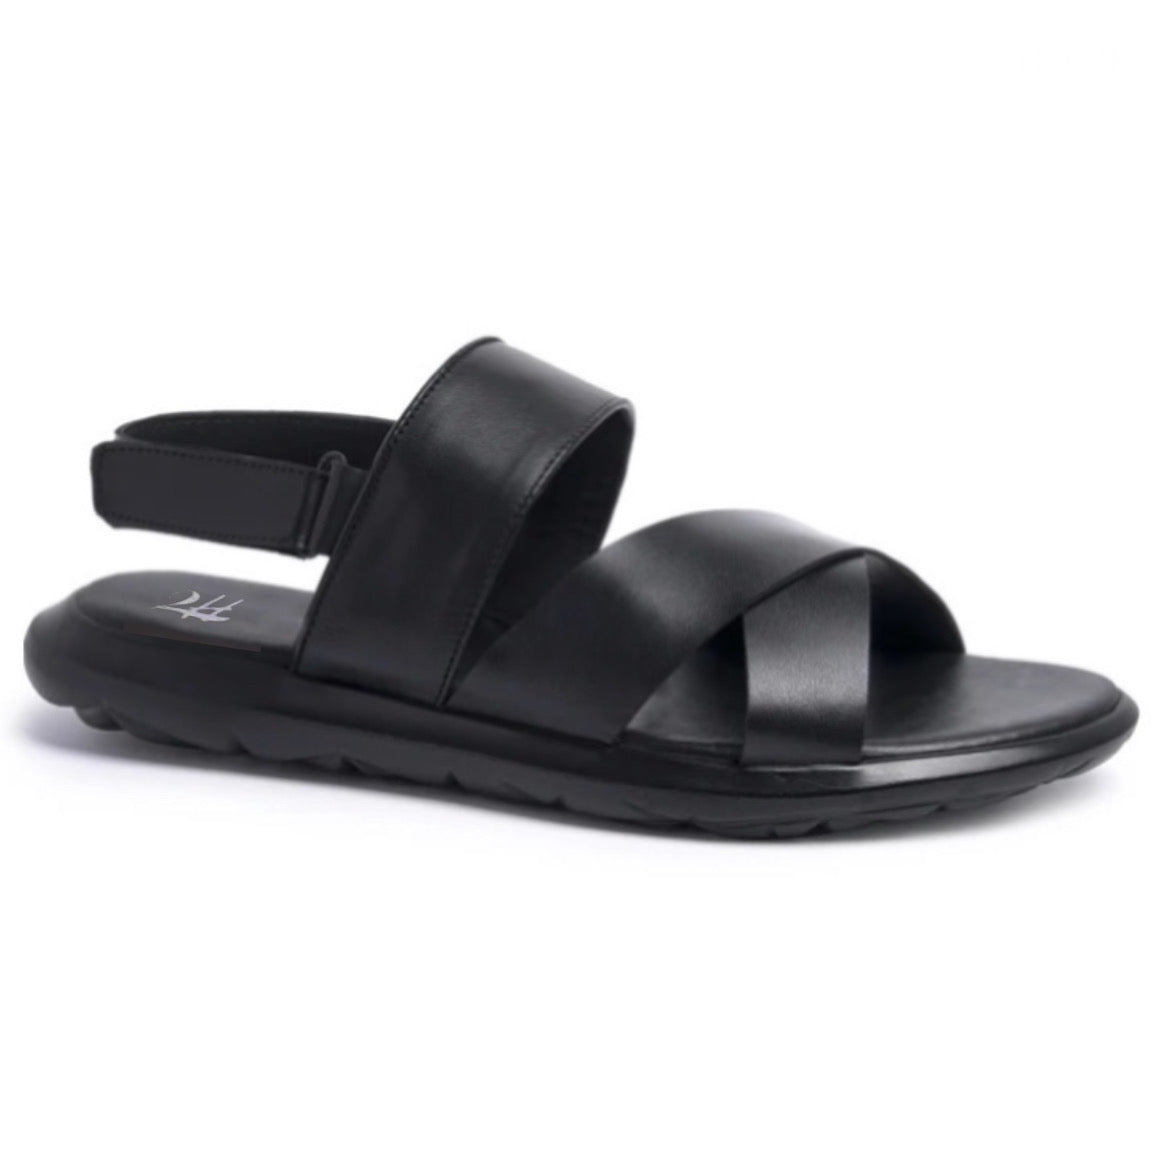 SALE! 2H G10-23-1 Black Leather Sandals